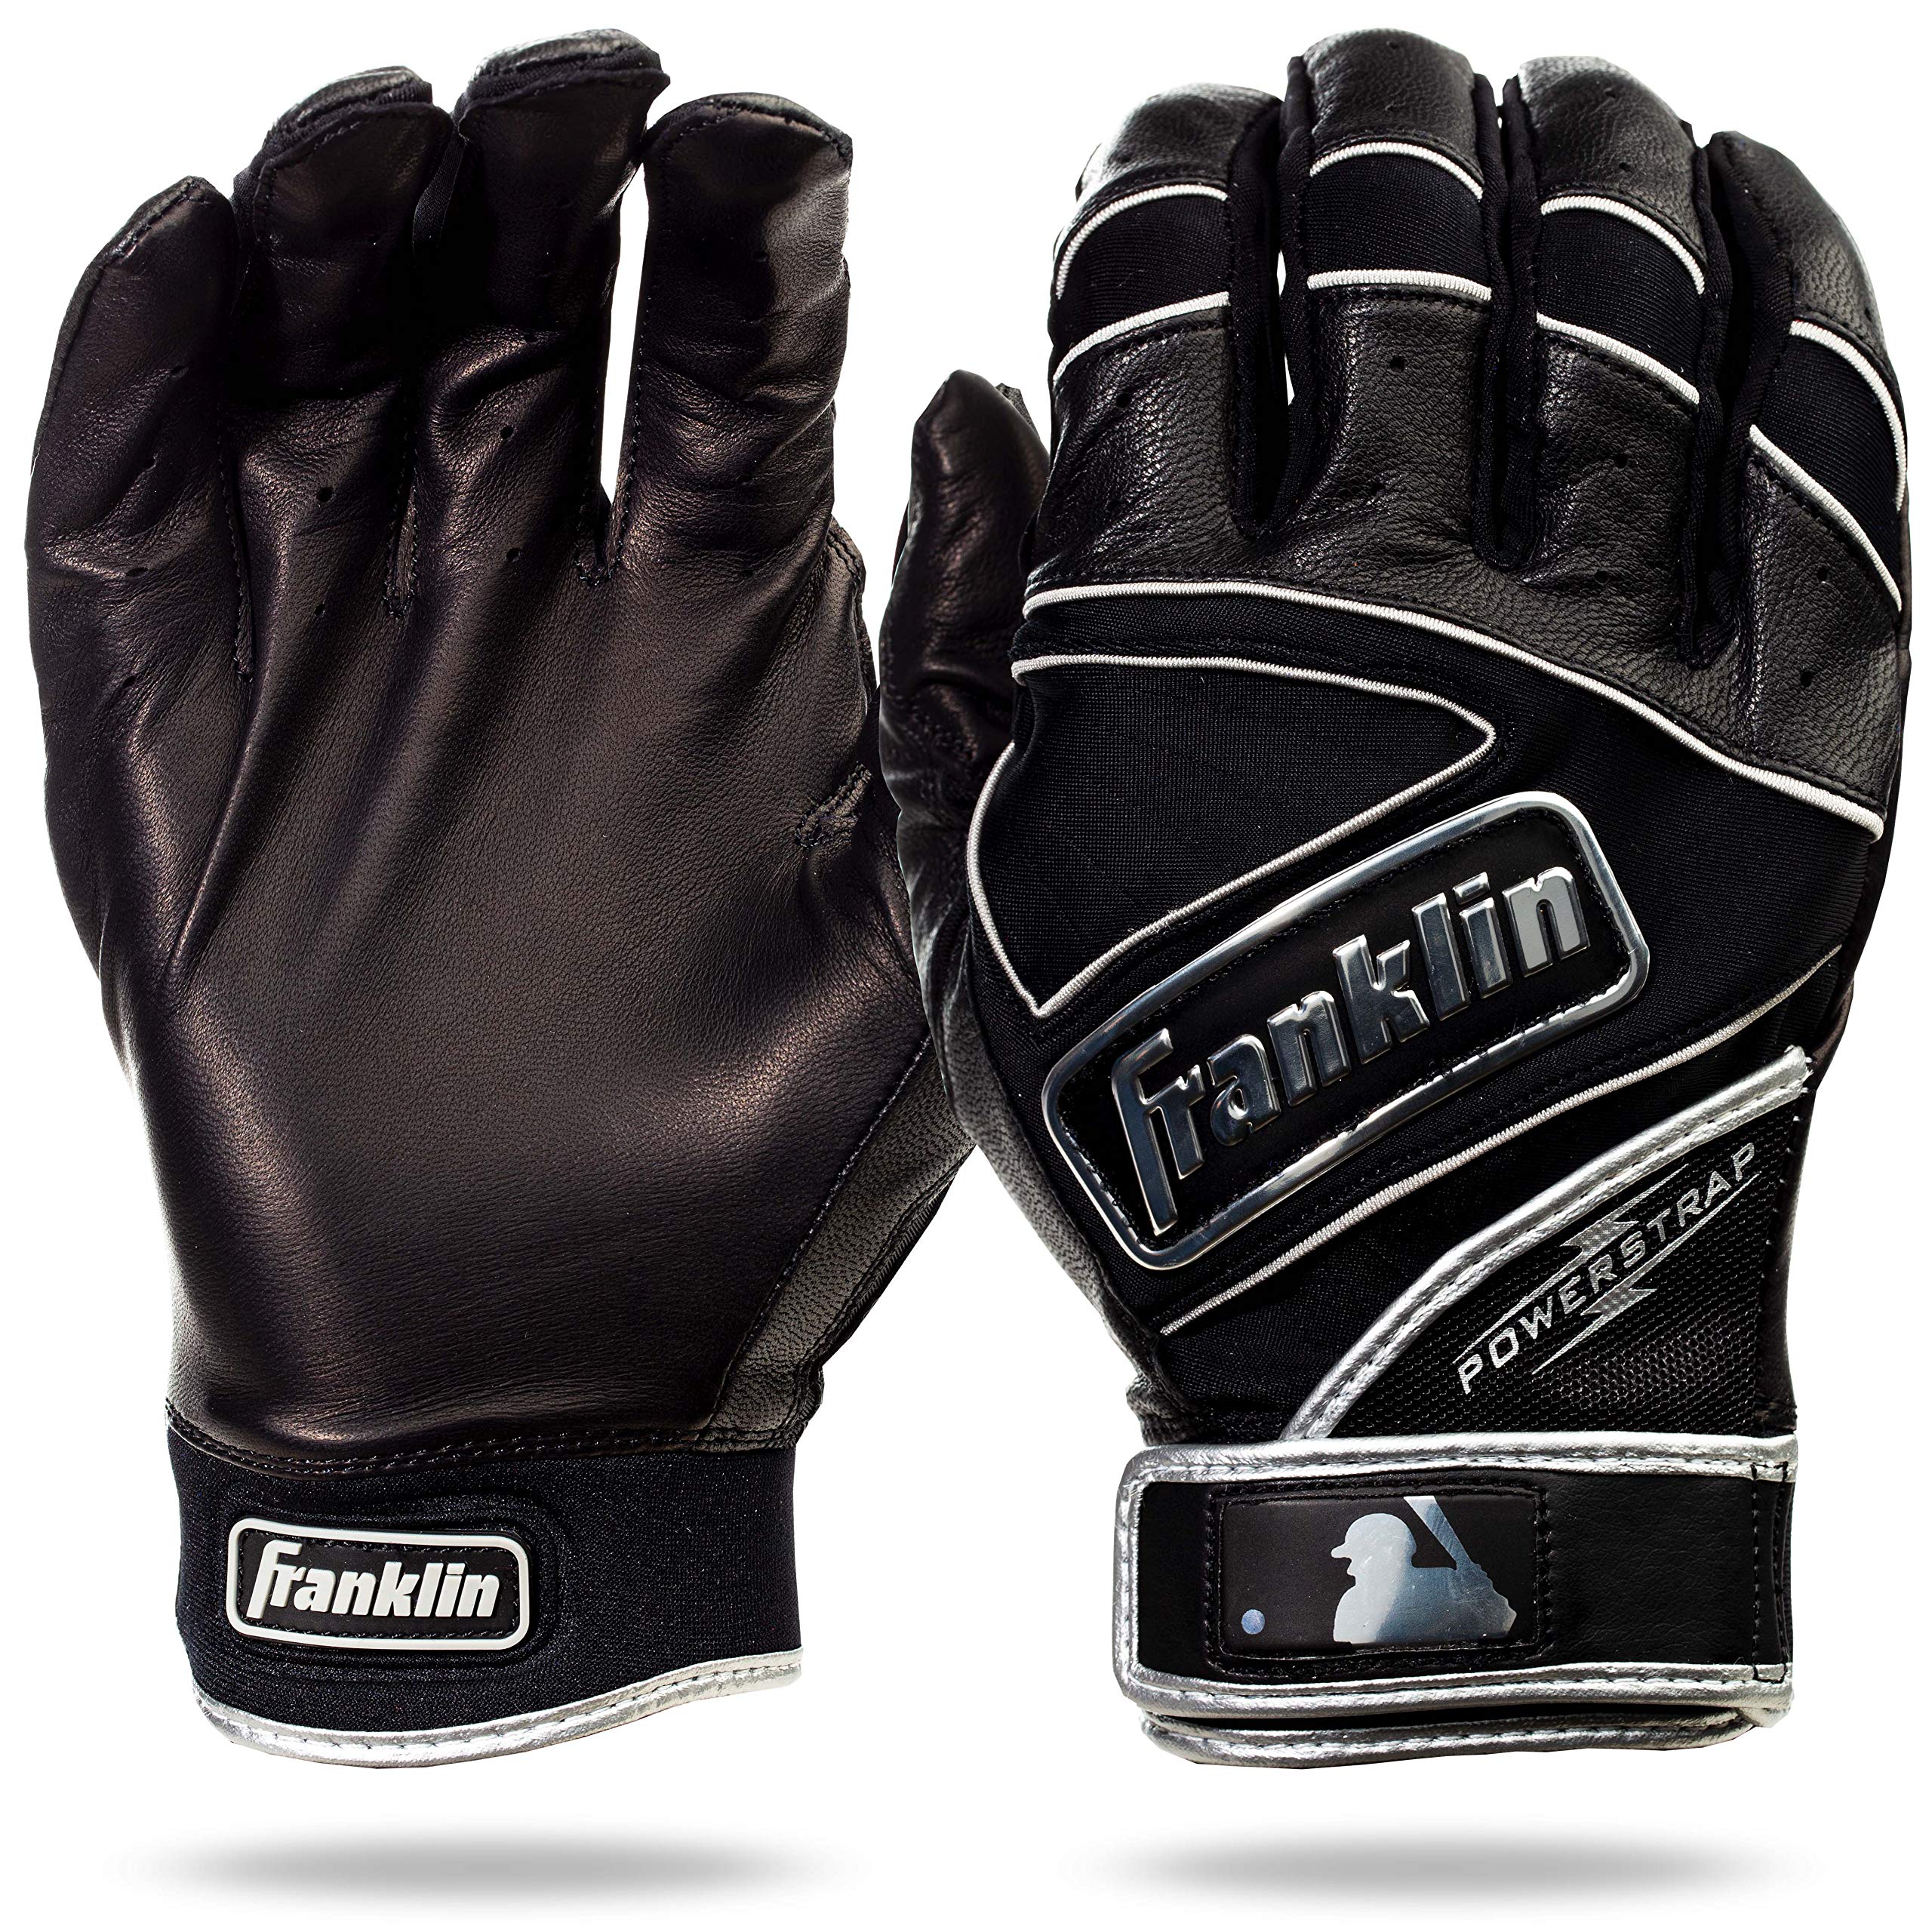 Franklin Sports chrome PowerstrapA Batting gloves - Black - Adult X-Large